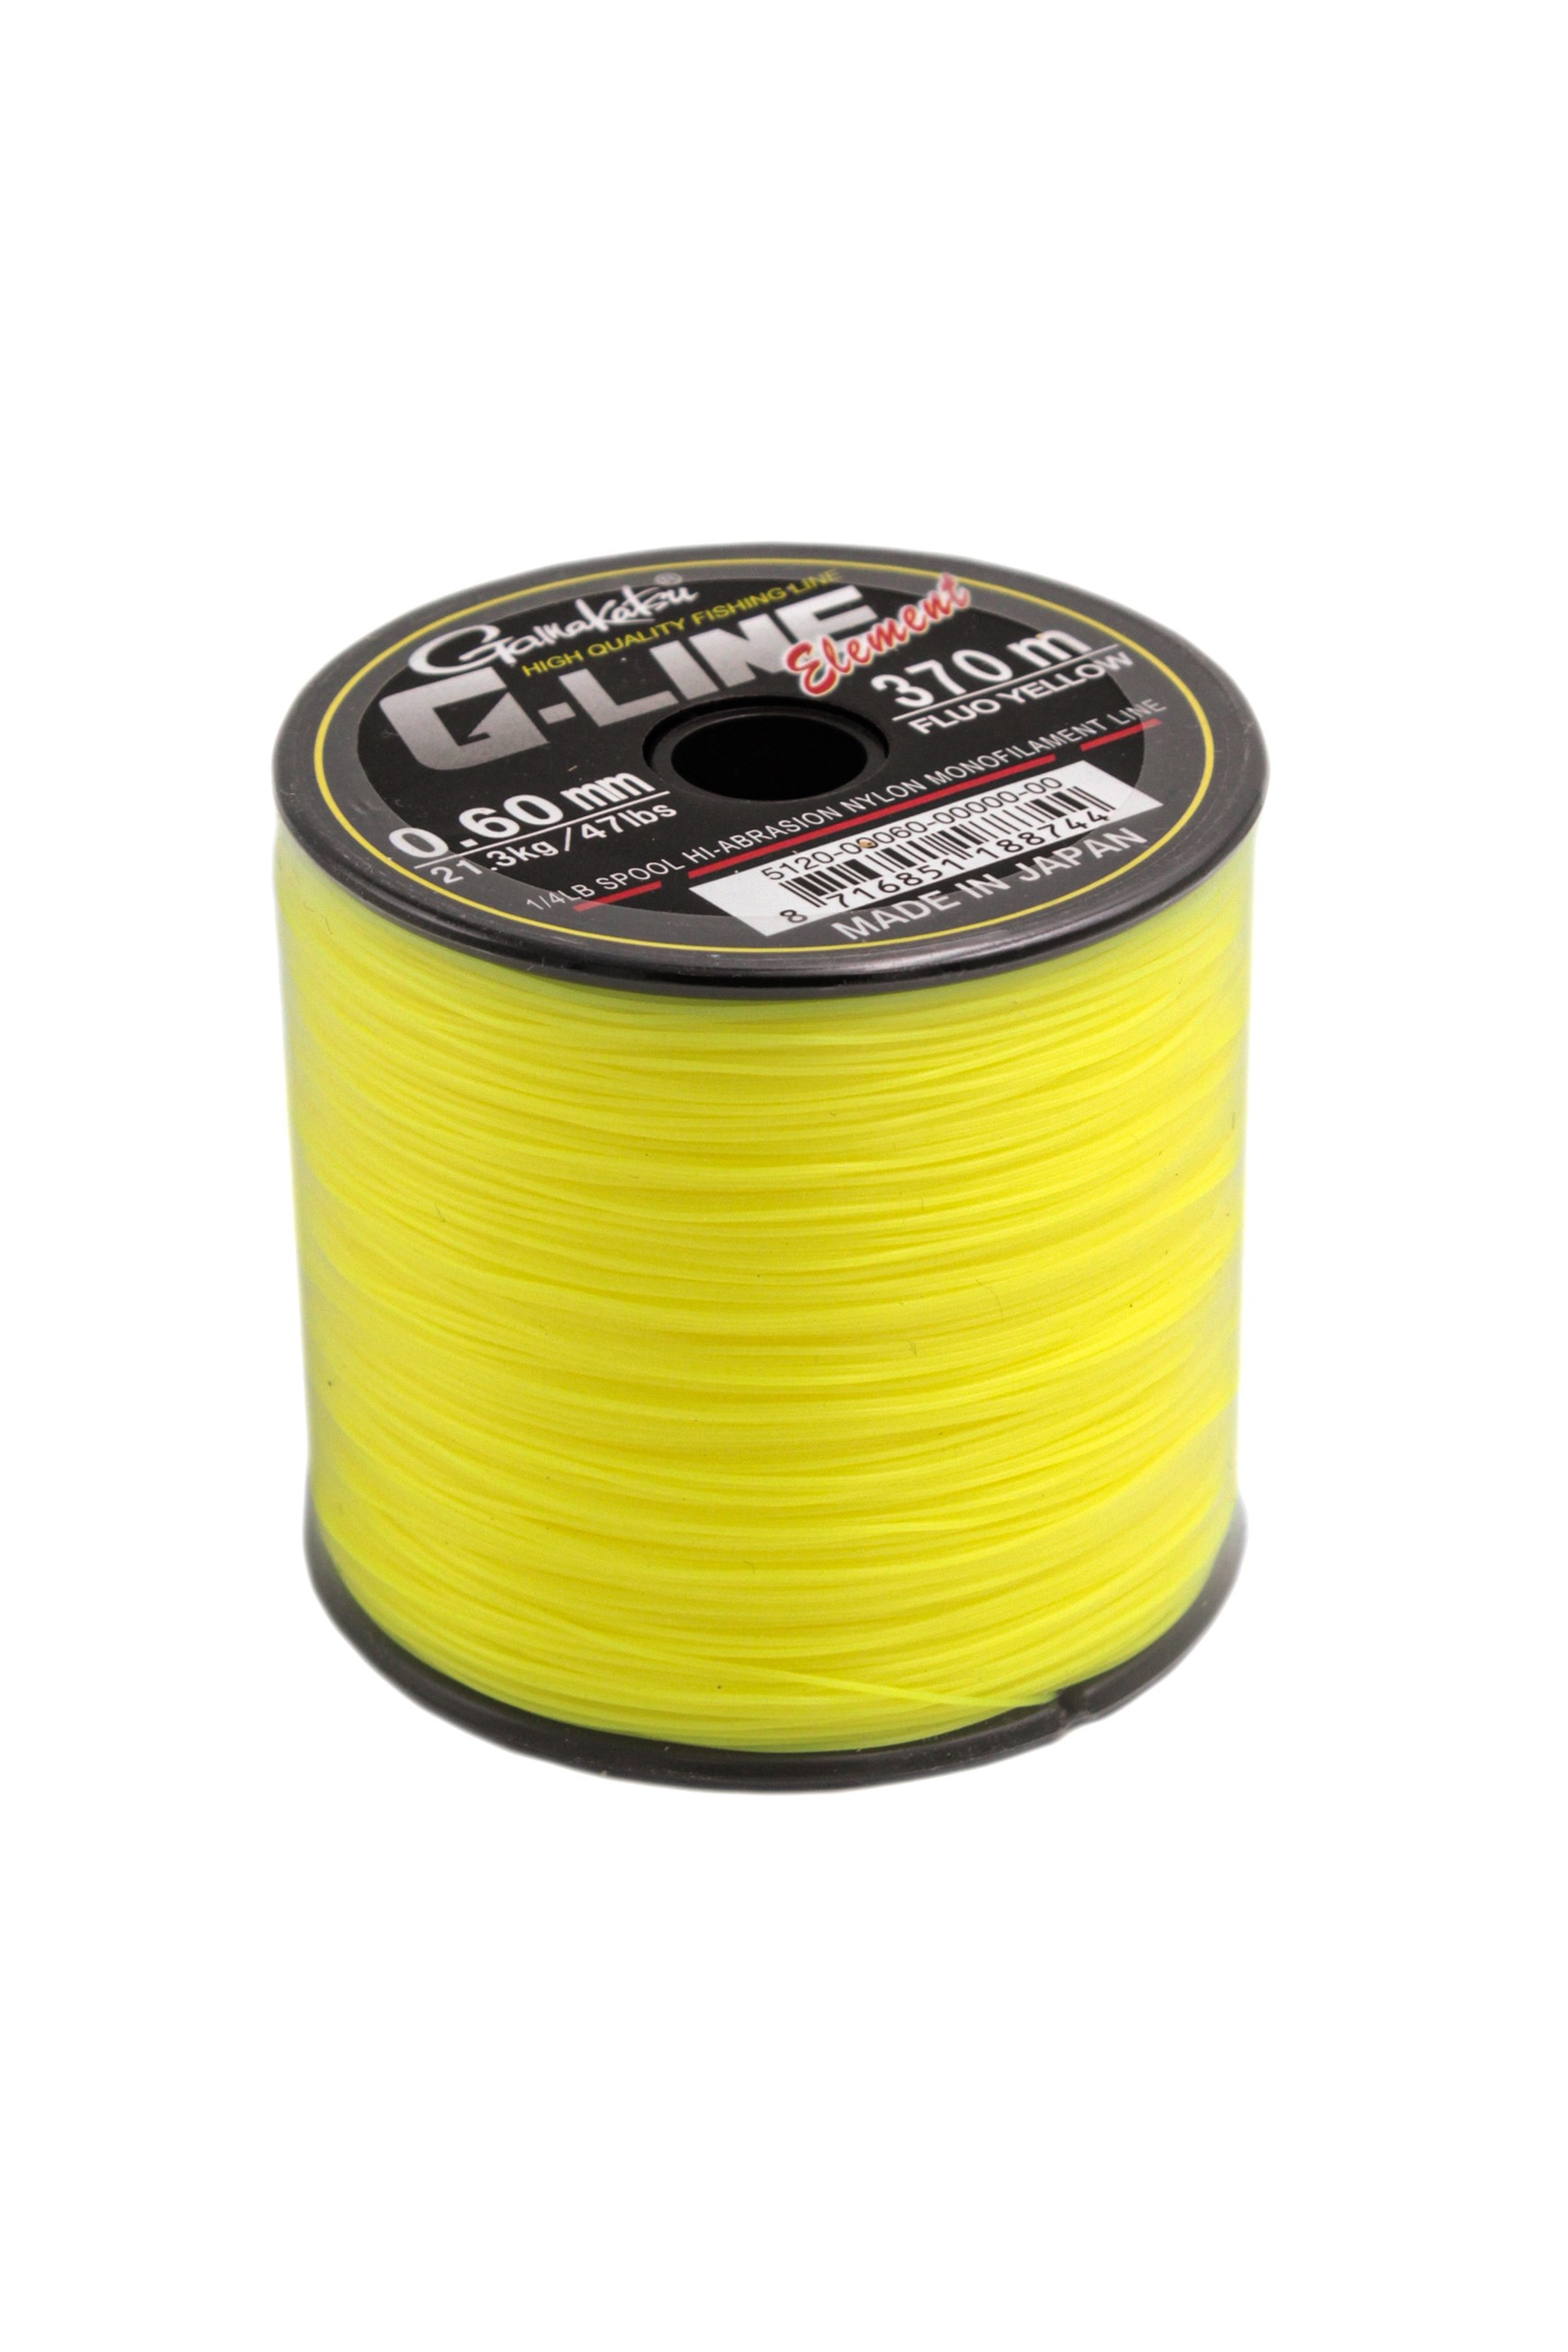 Леска Gamakatsu G-line element F-yellow 0.60мм 370м - фото 1